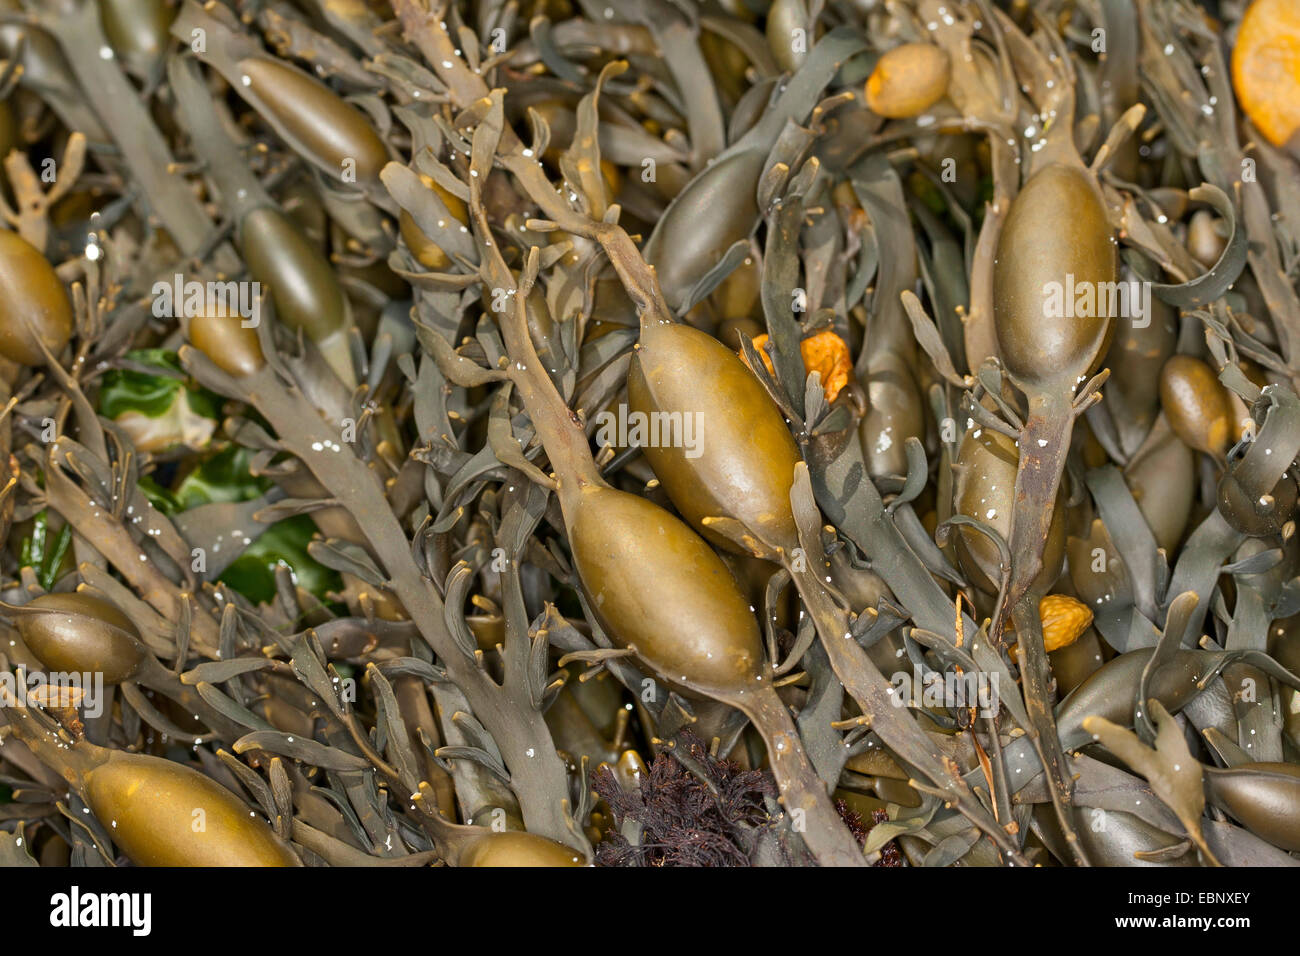 Rockweed, Norwegian kelp, Knotted kelp, Knotted wrack, Egg wrack, Yellow Tang, Knobbed Wrack (Ascophyllum nodosum, Ascophylla nodosa), with fruiting bodies, Germany Stock Photo